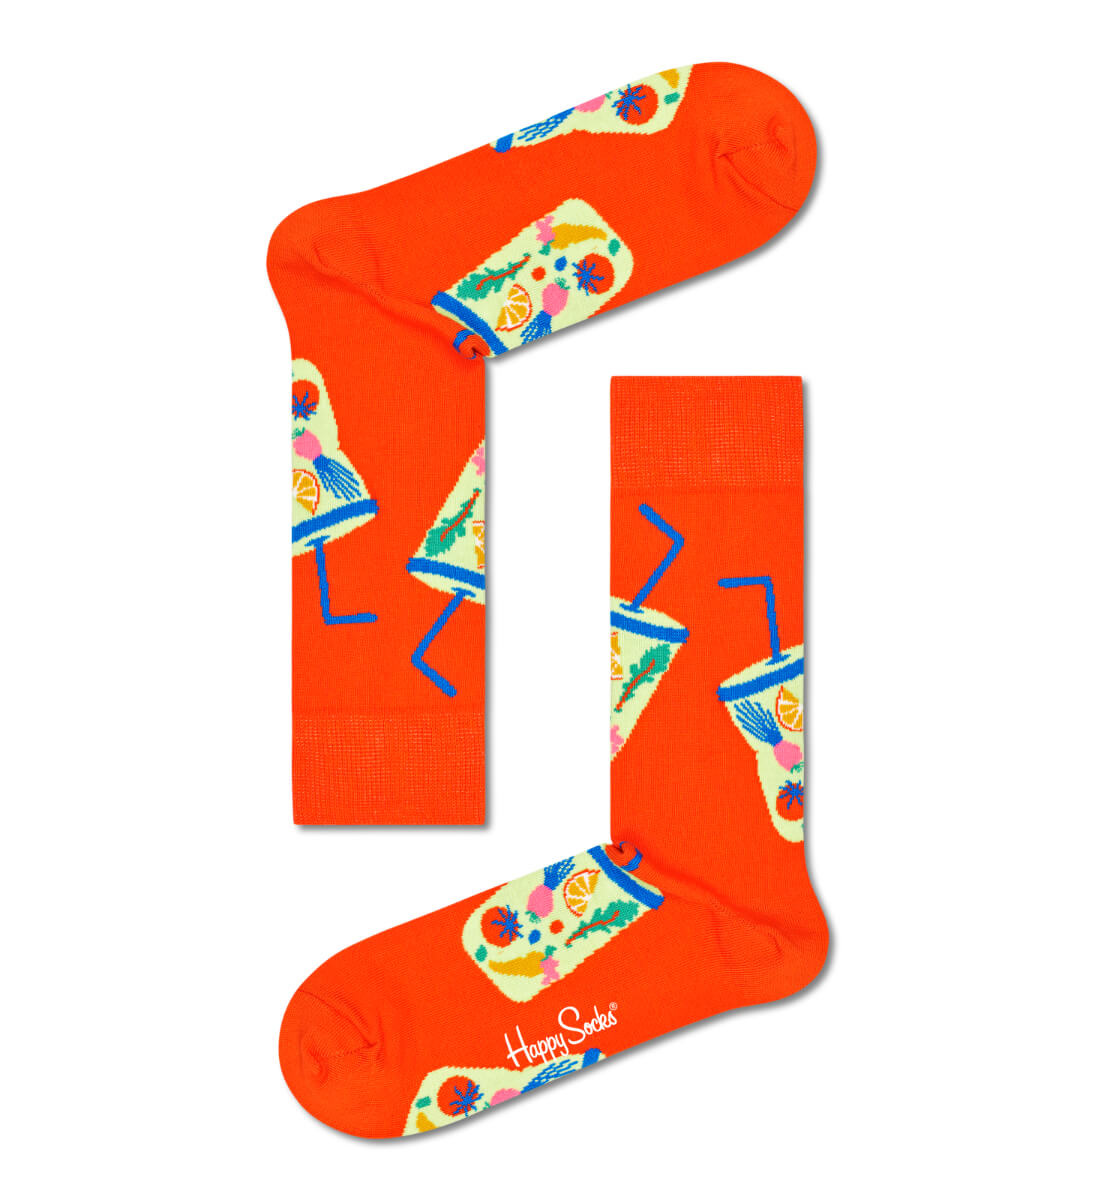 Smoothie Sock by Happy Socks